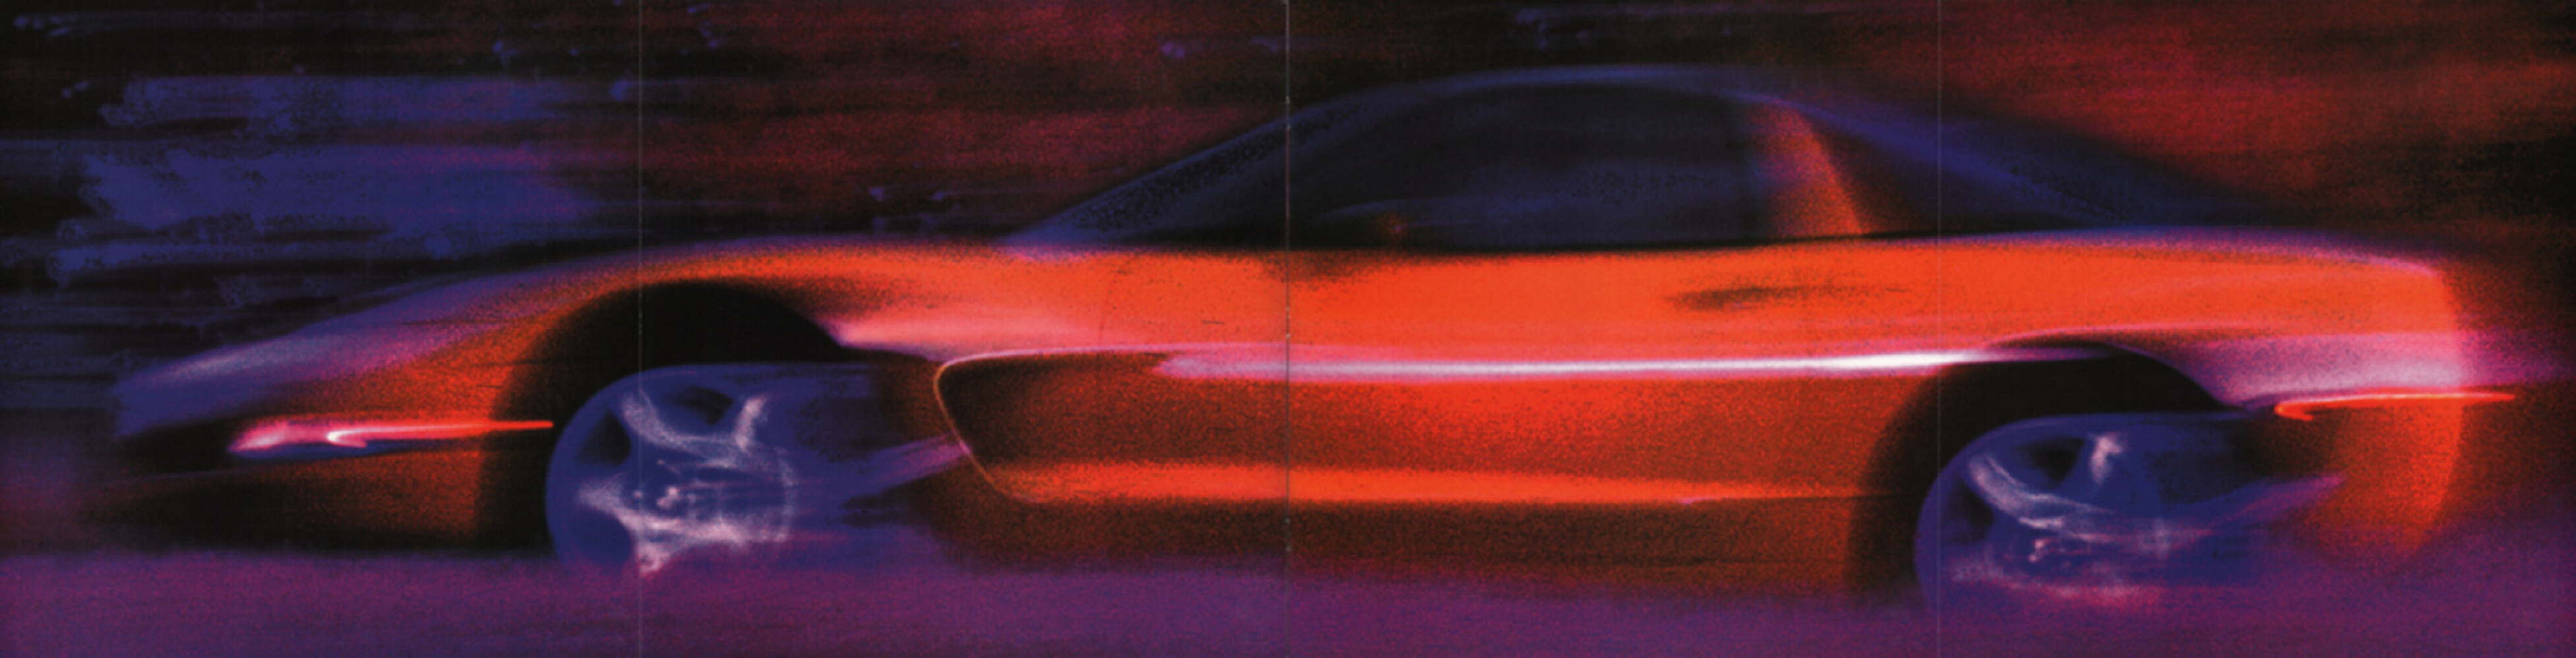 1999_Chevrolet_Corvette_Prestige-20-21-22-23